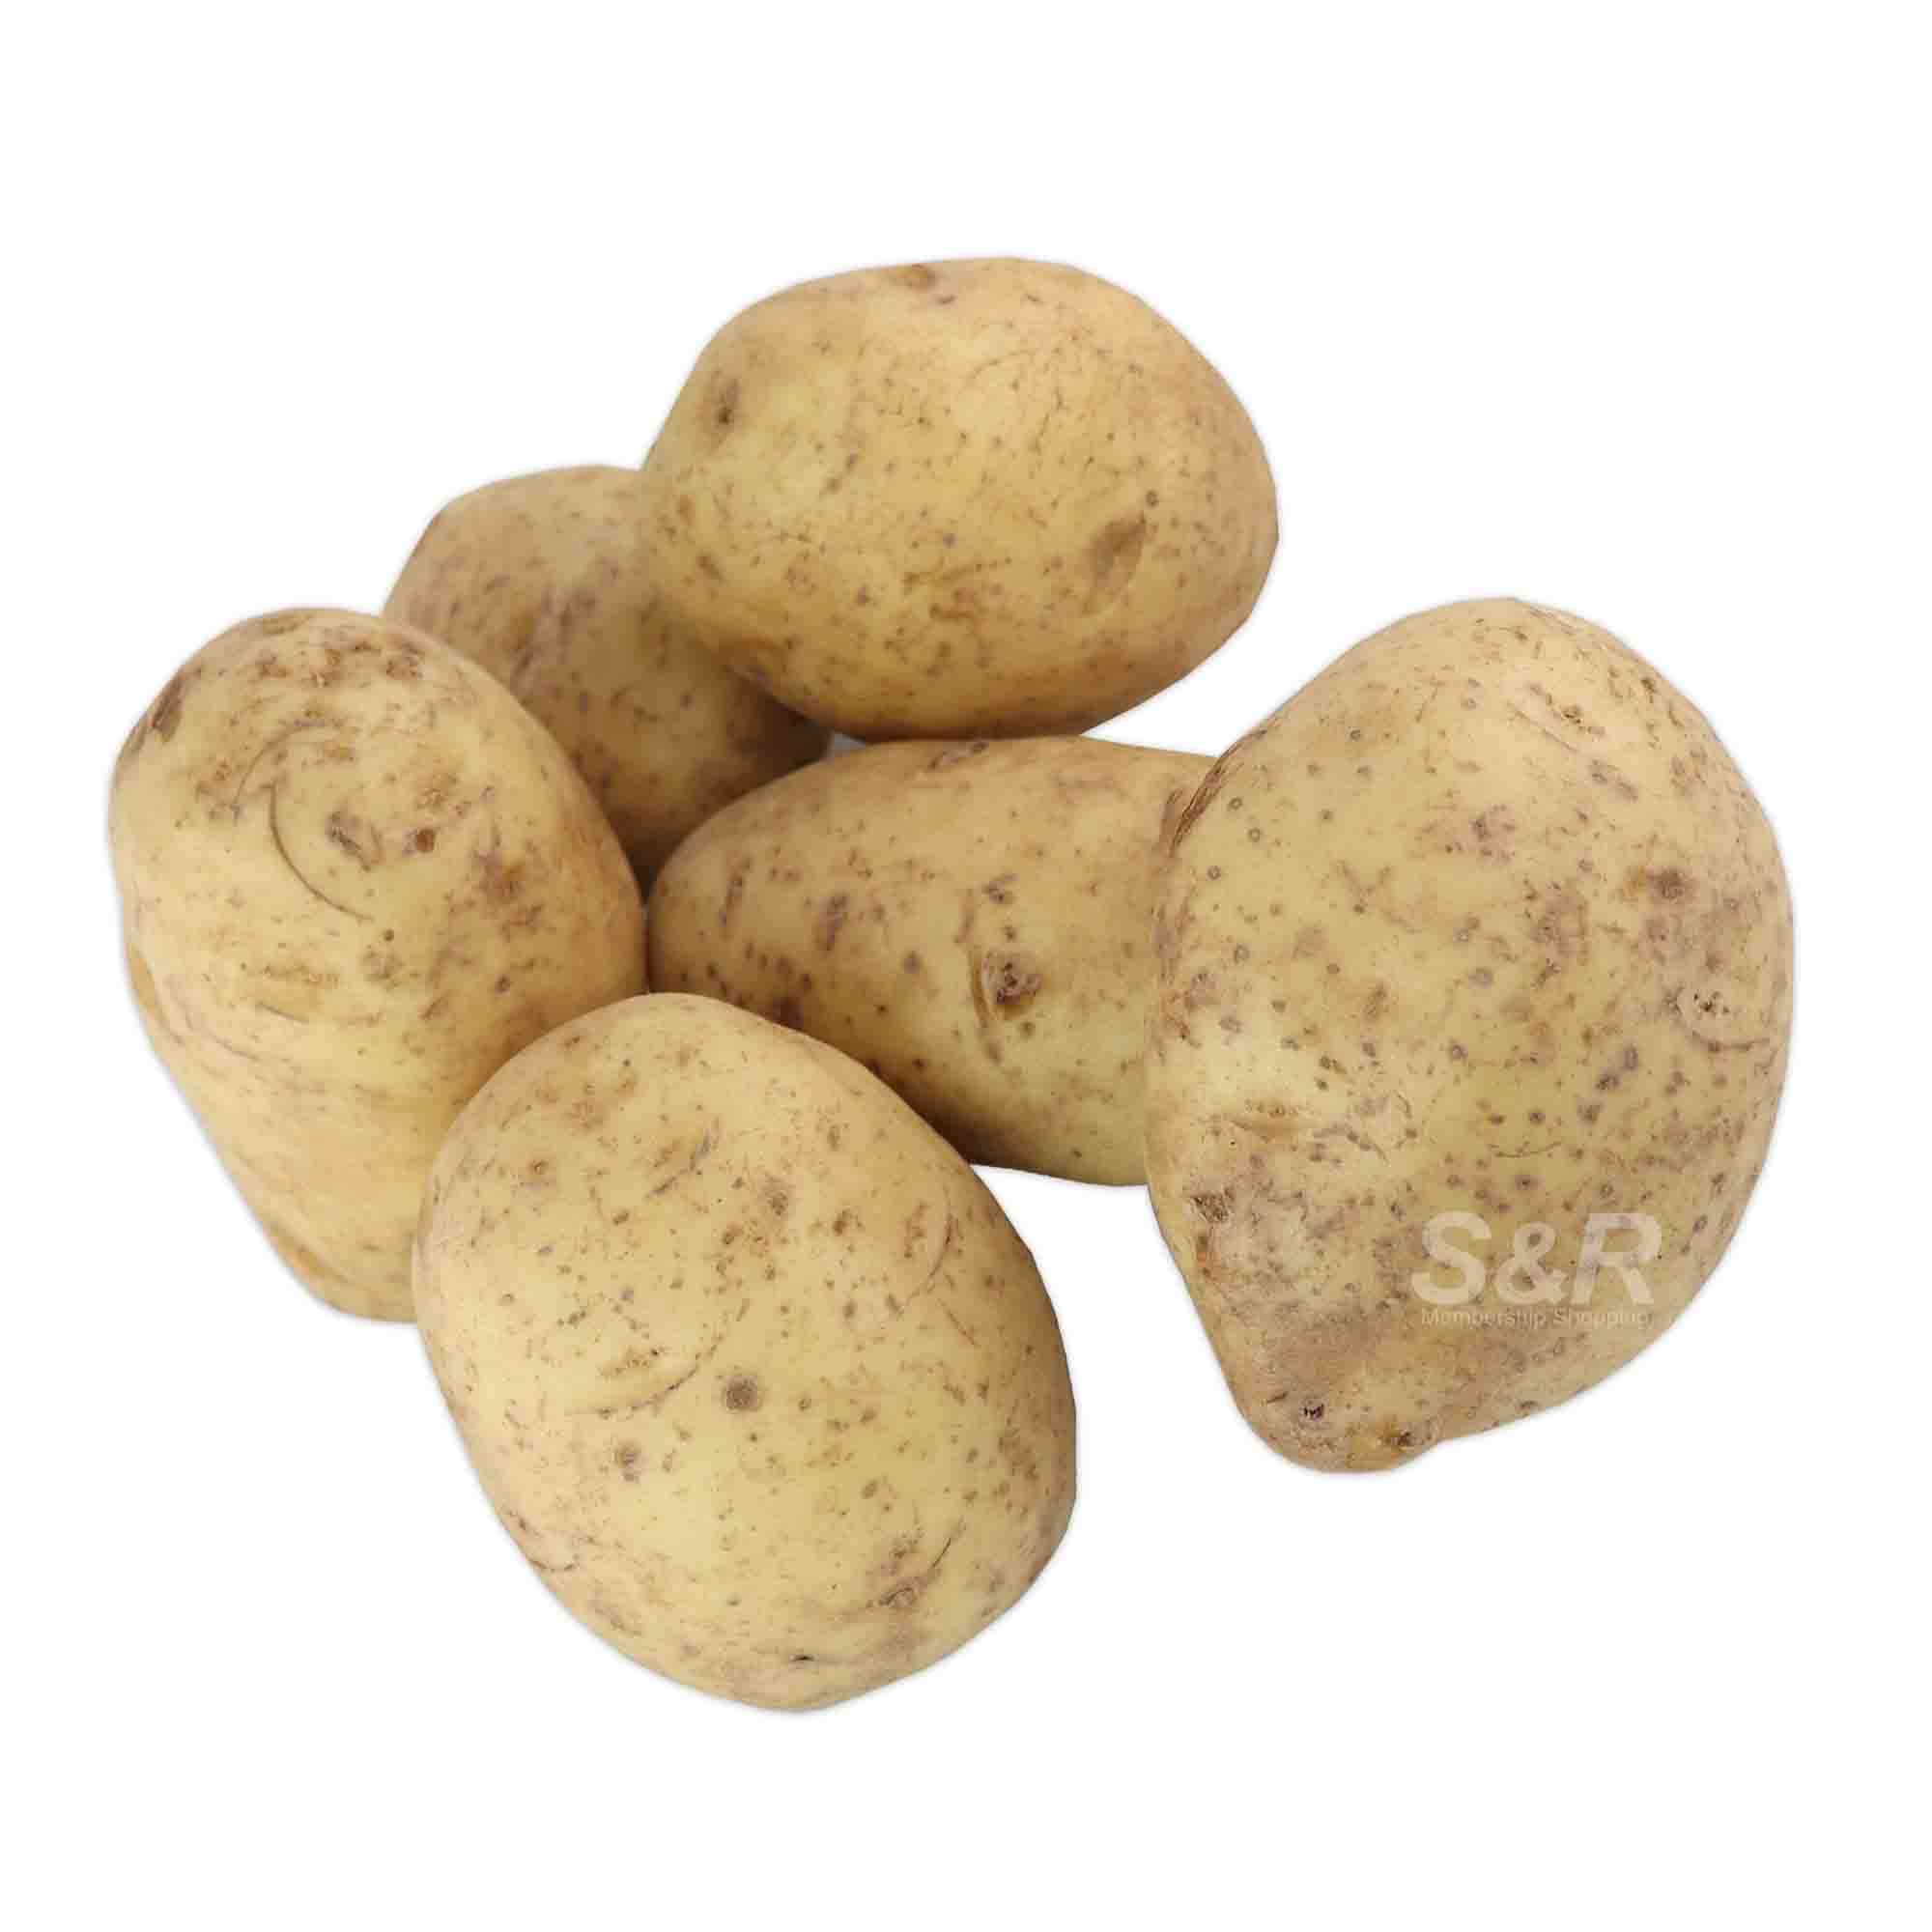 S&R Jumbo Potato approx. 1.5kg